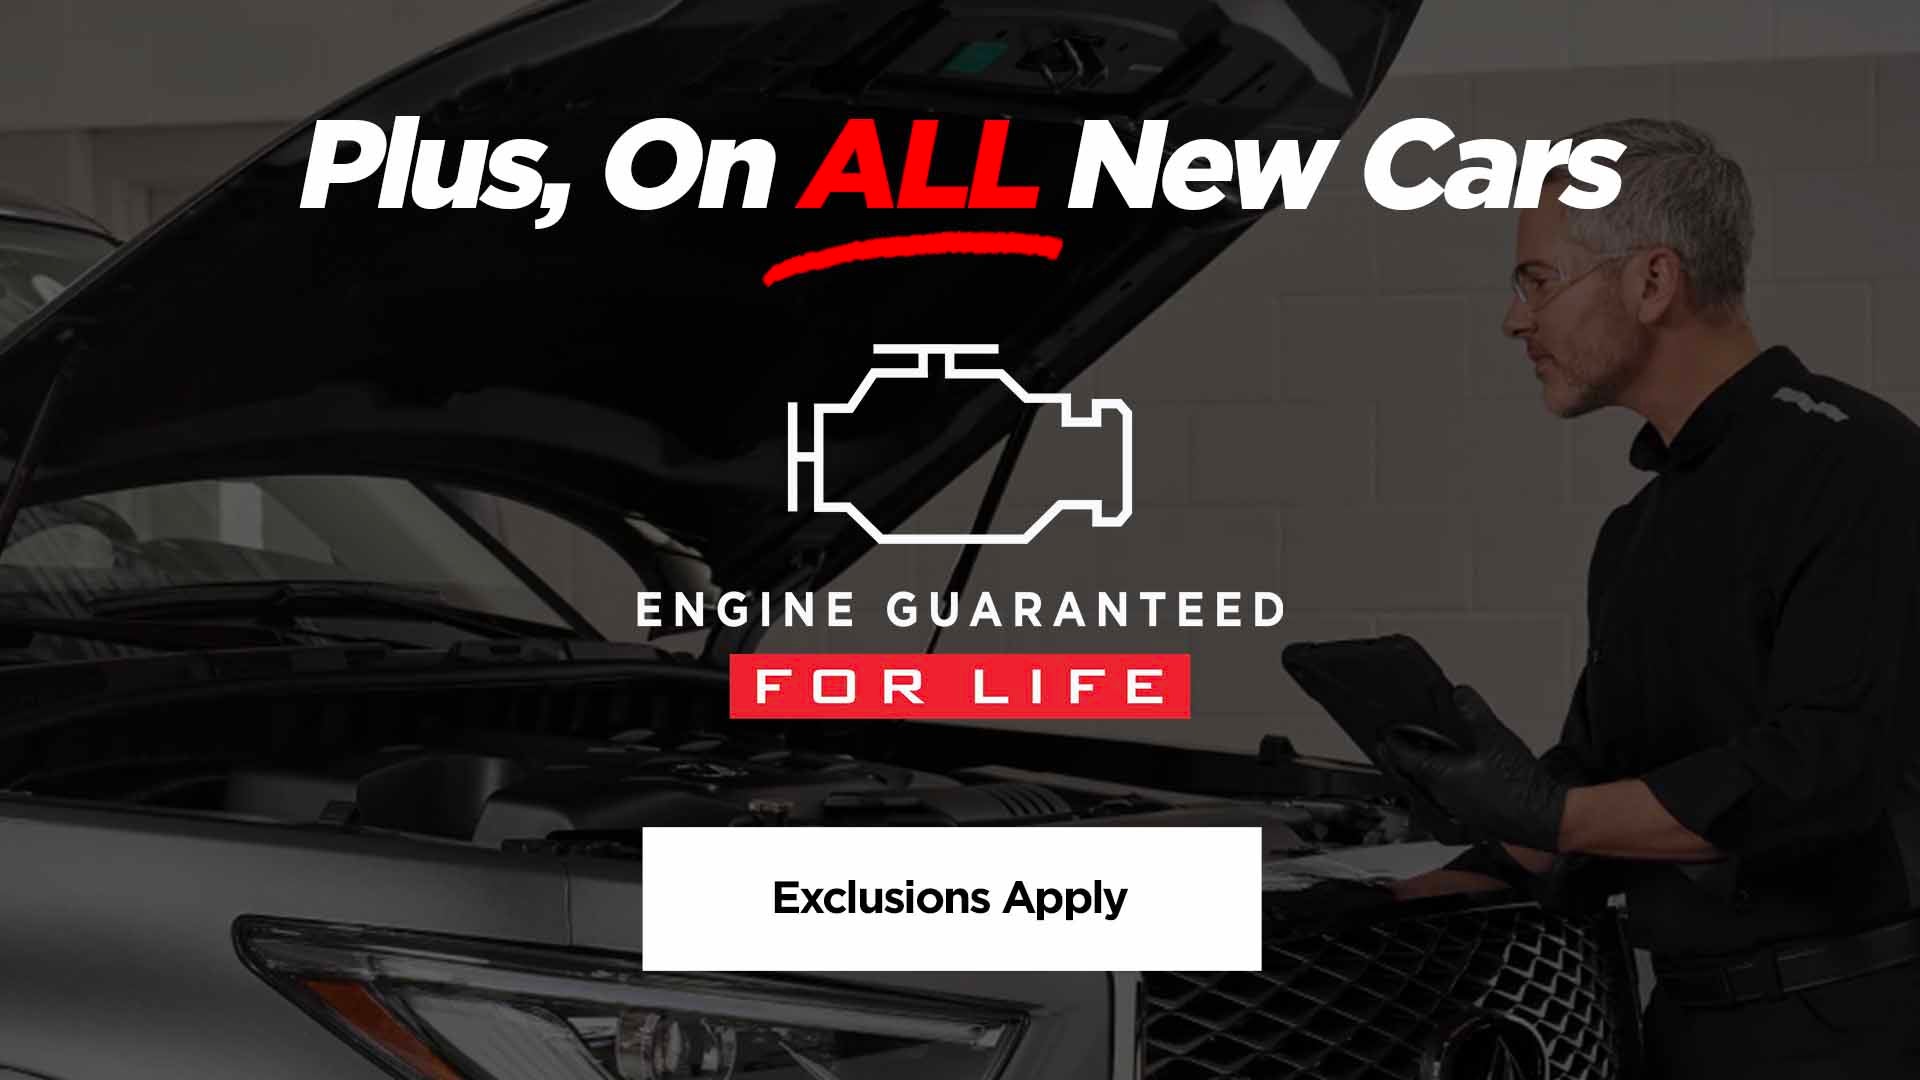 Priority Honda Chesapeake in Chesapeake VA, Engine Guaranteed on All New Cars*